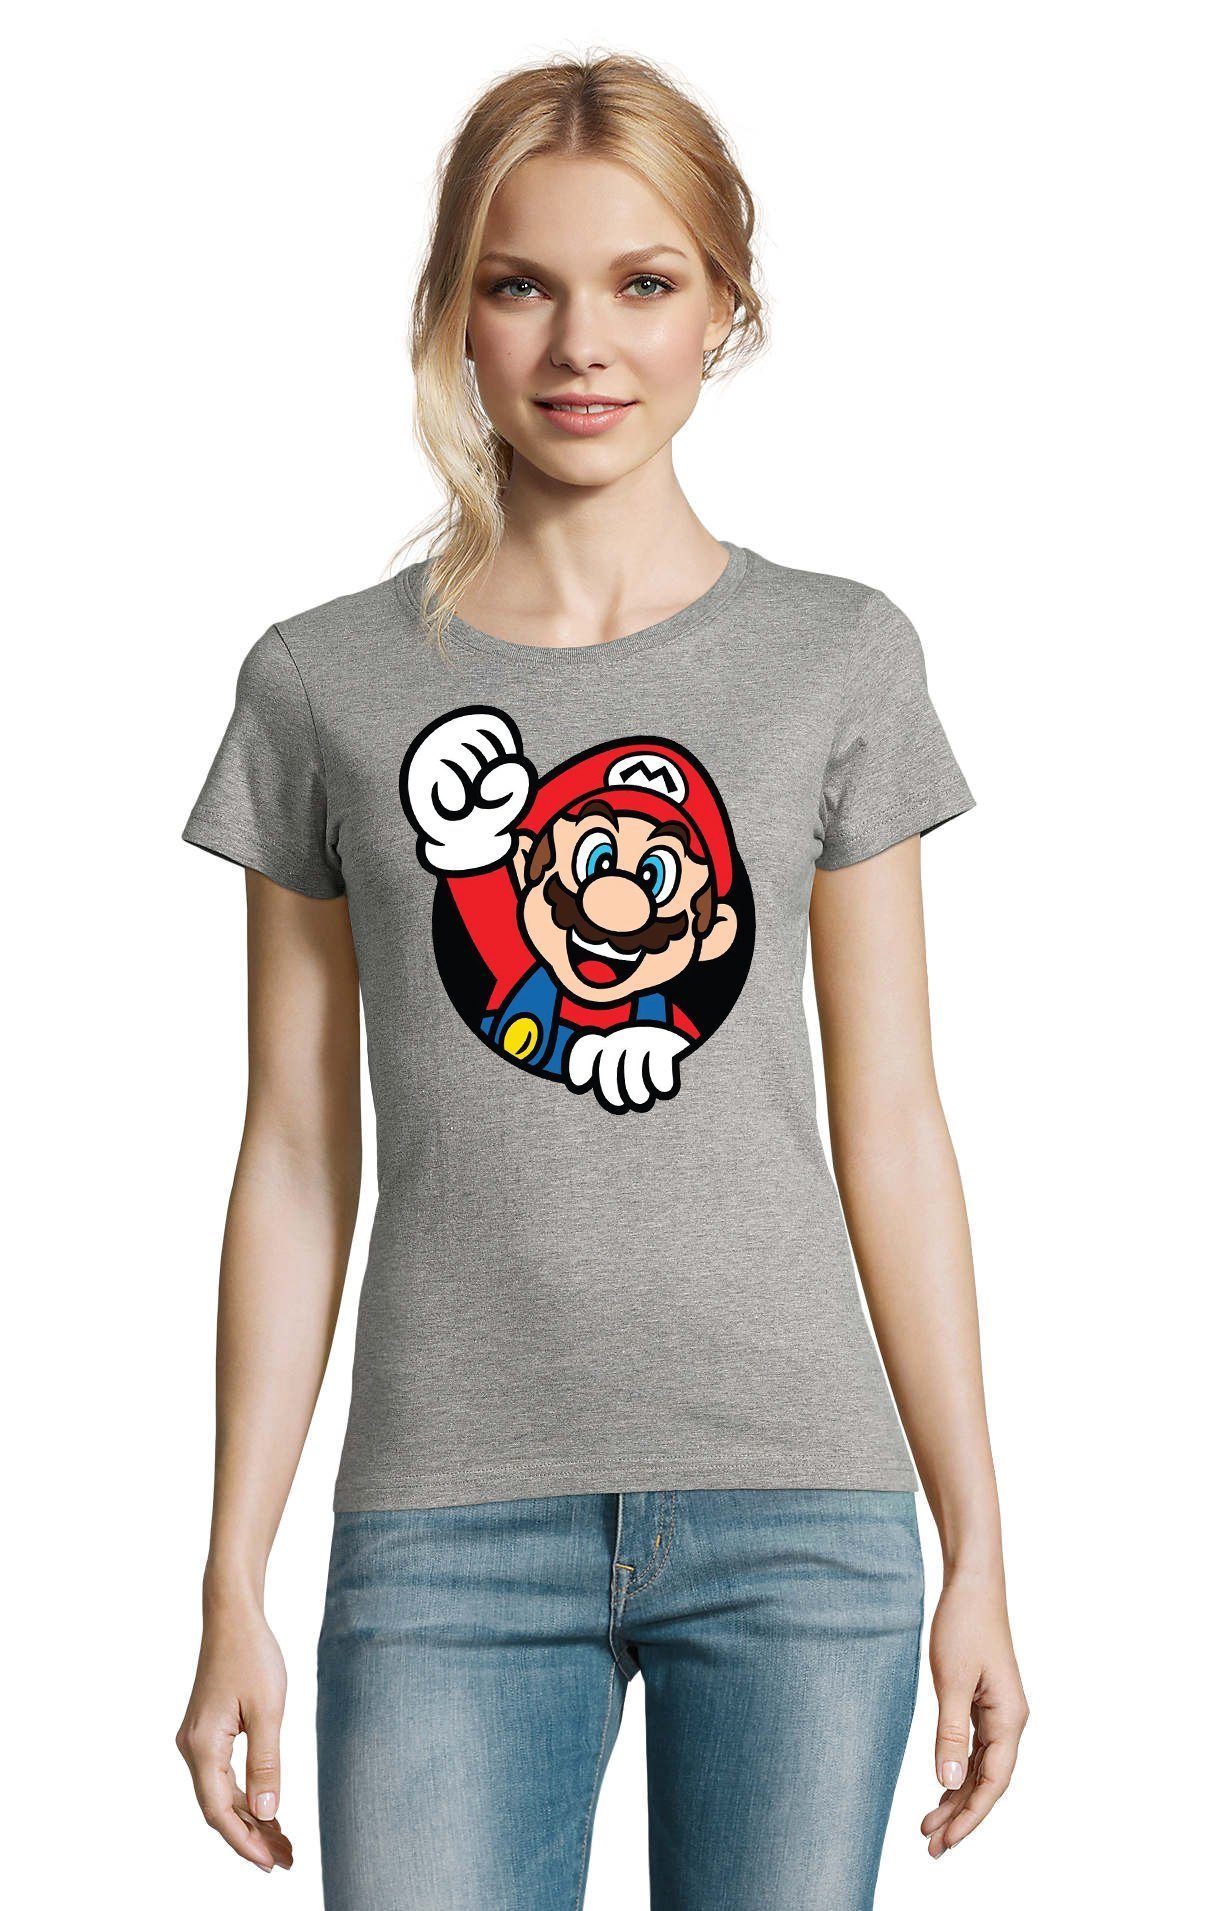 Blondie & Brownie T-Shirt Damen Super Mario Faust Nerd Konsole Gaming Spiel Nintendo Grau